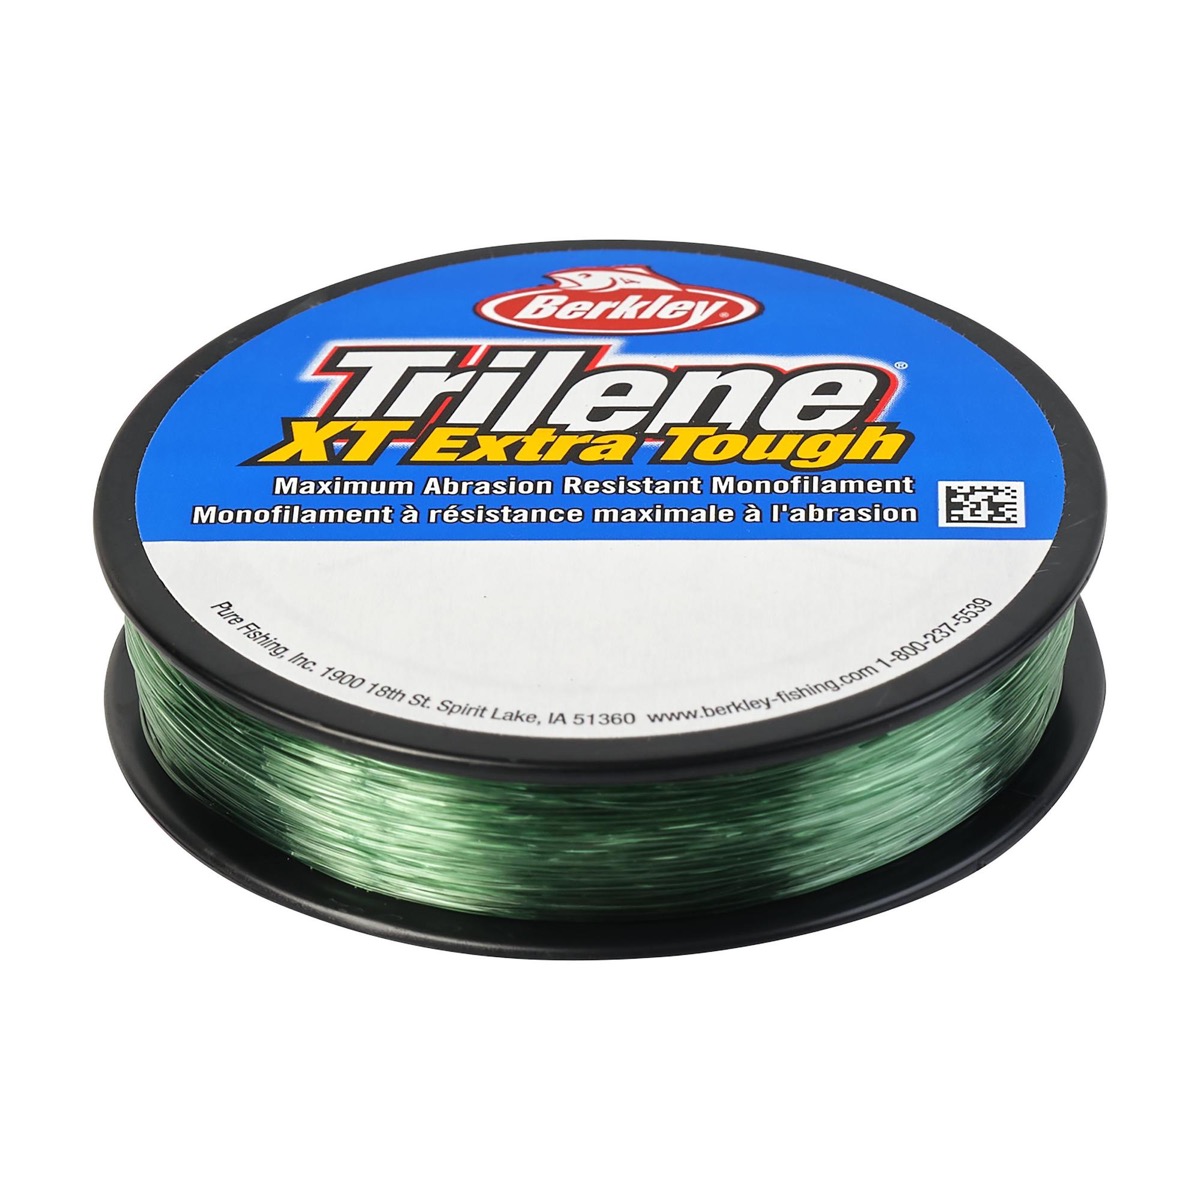 Berkley Trilene XT Extra Tough Fishing Line ~ Lo Vis Green